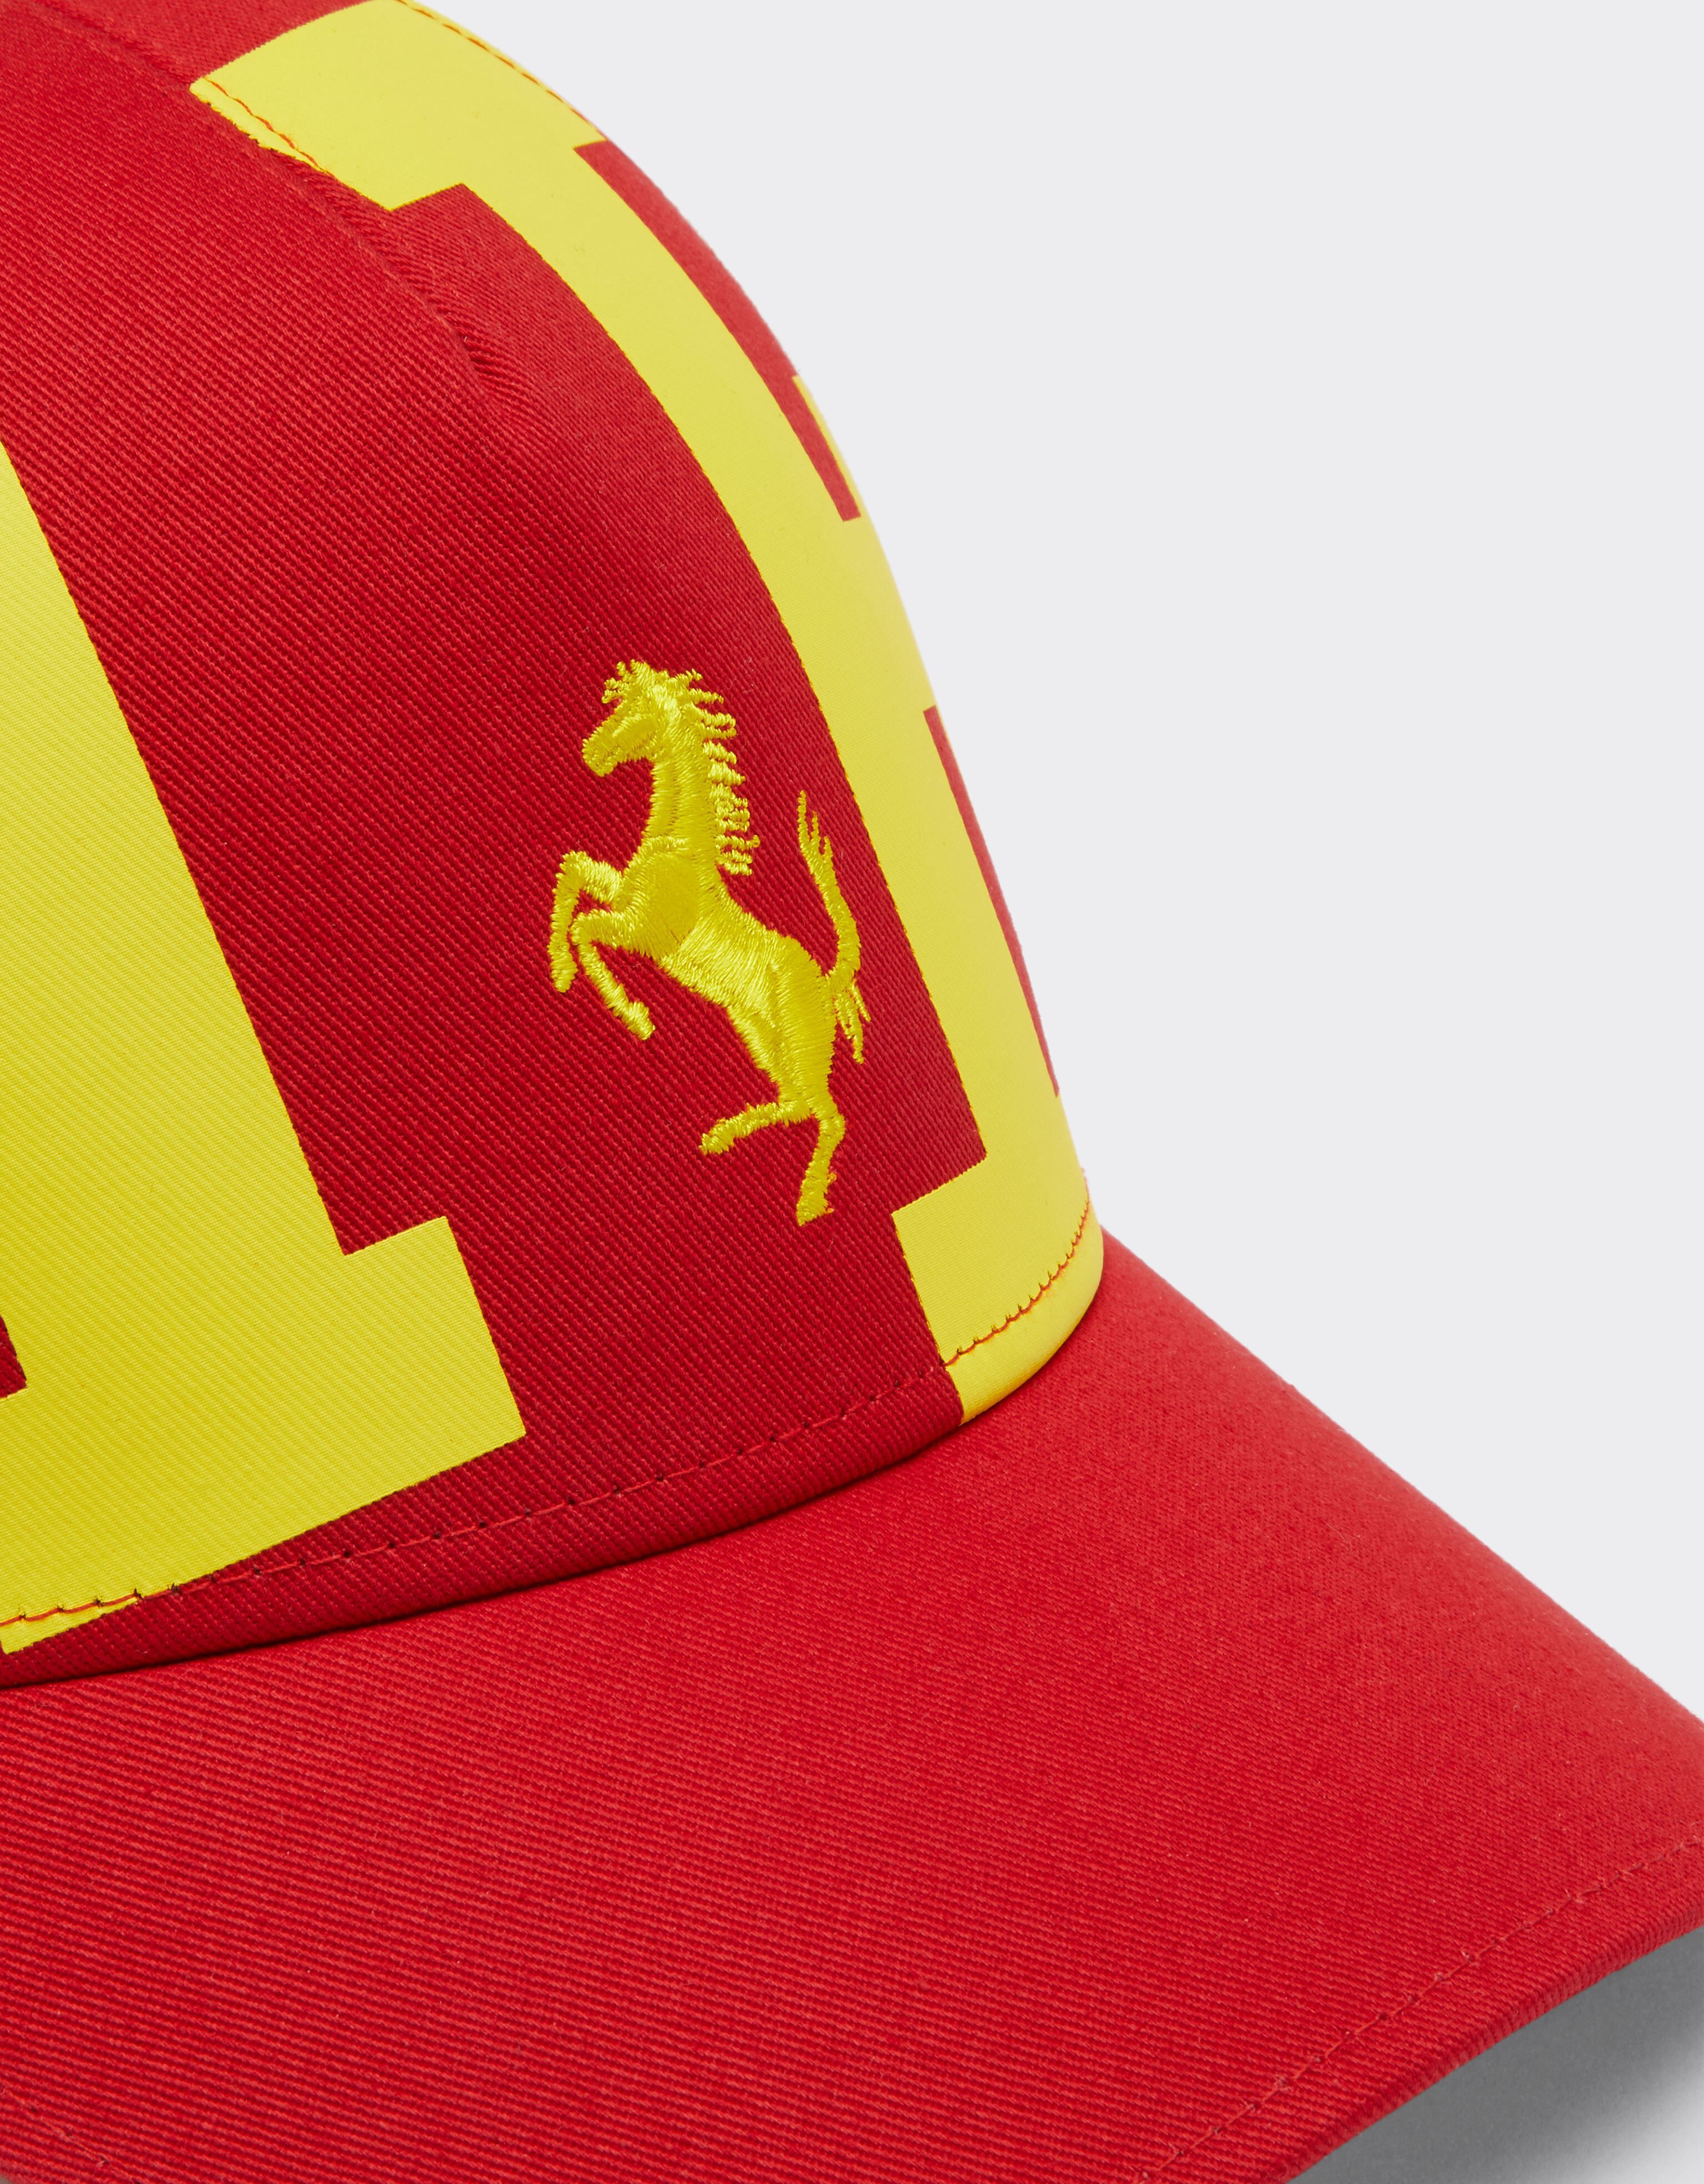 Ferrari Children’s cap with Ferrari logo Rosso Corsa 47096fK